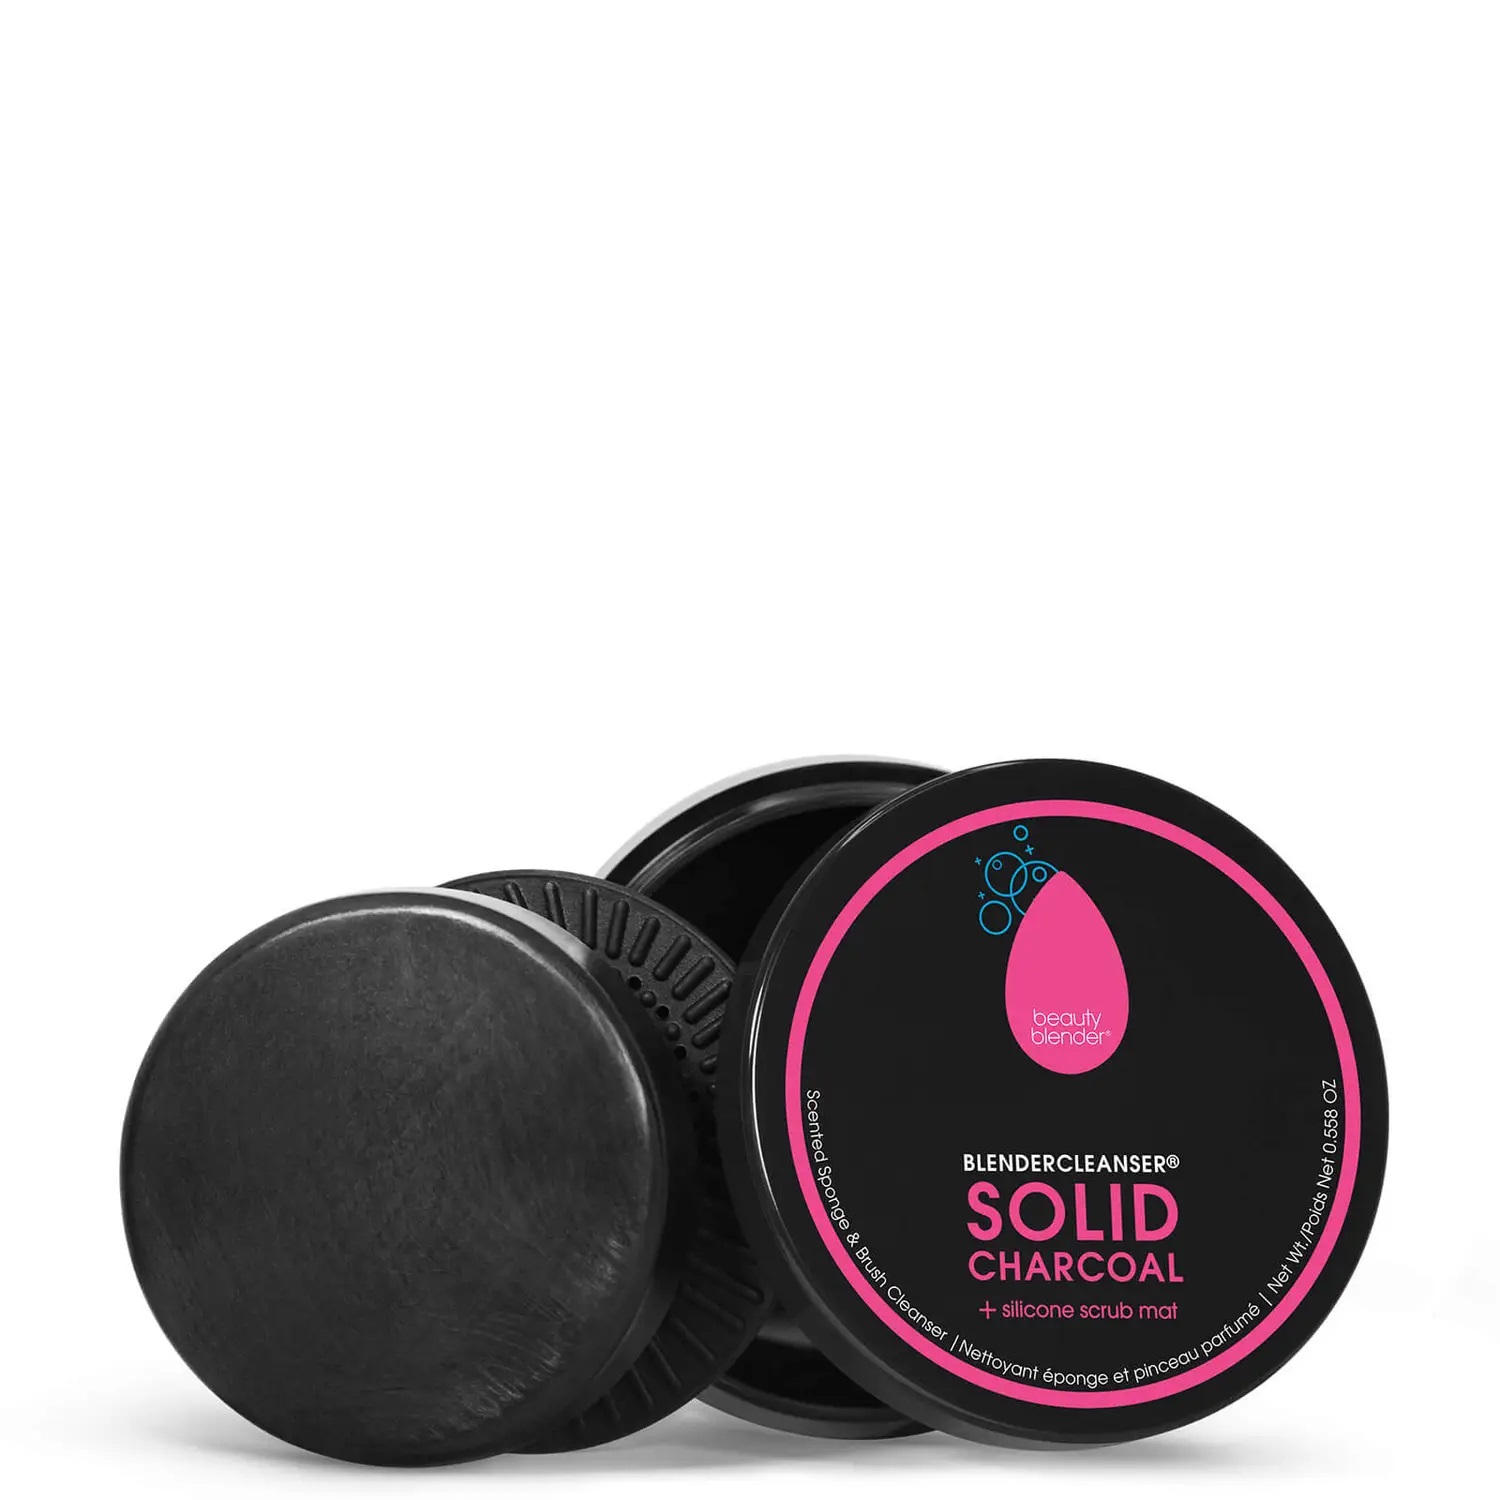 Sapun solid pentru curatare ustensile machiaj Blendercleanser Charcoal, 28 g, Beauty Blender